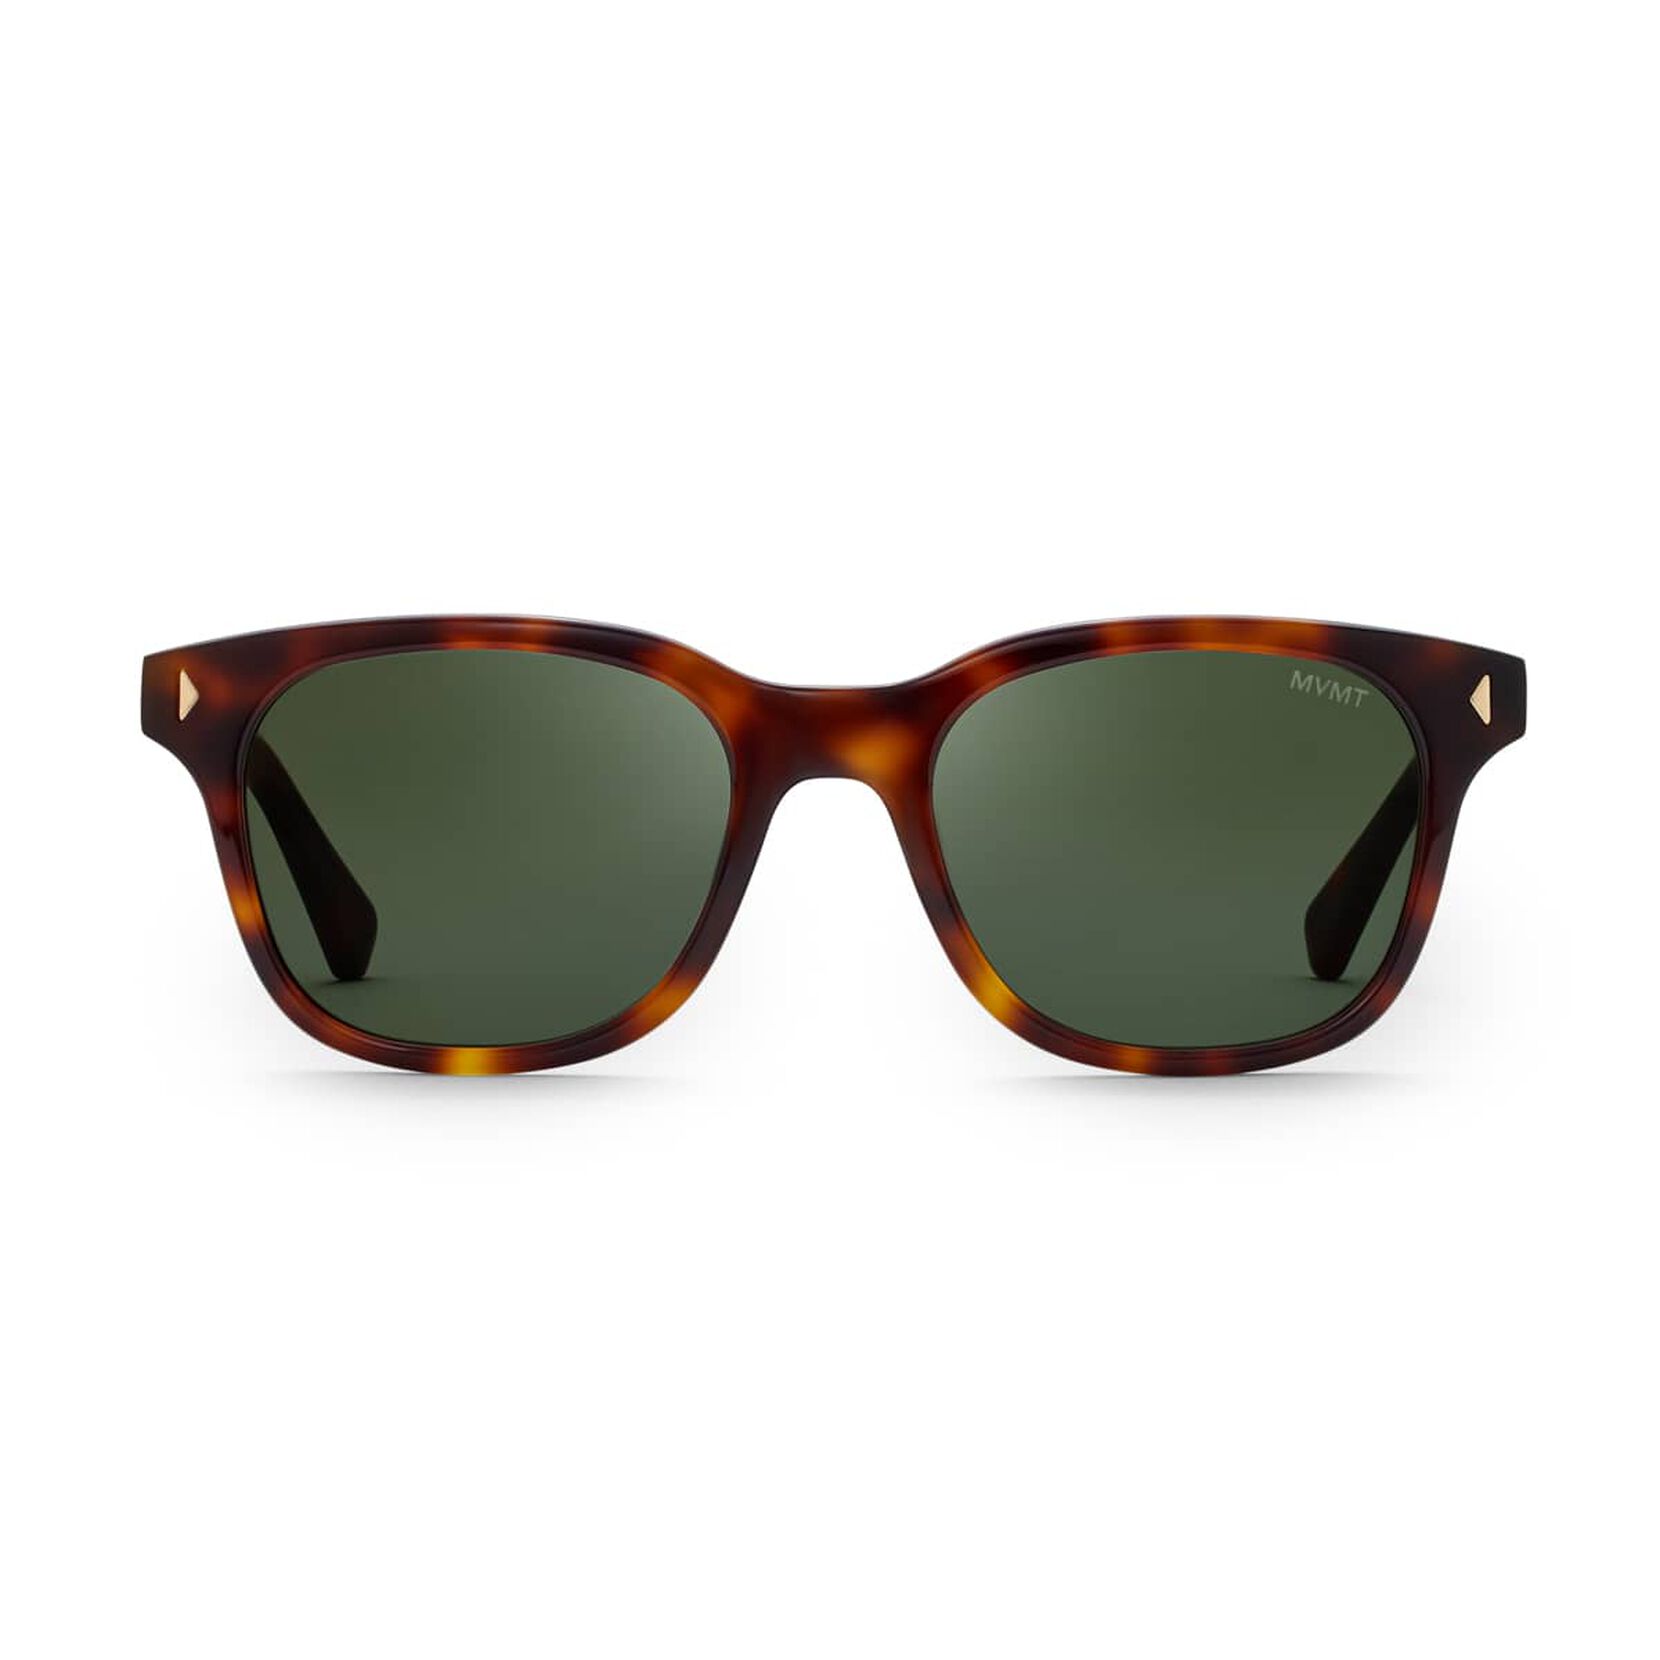 Coaster Classic - California Modern Sunglasses | MVMT